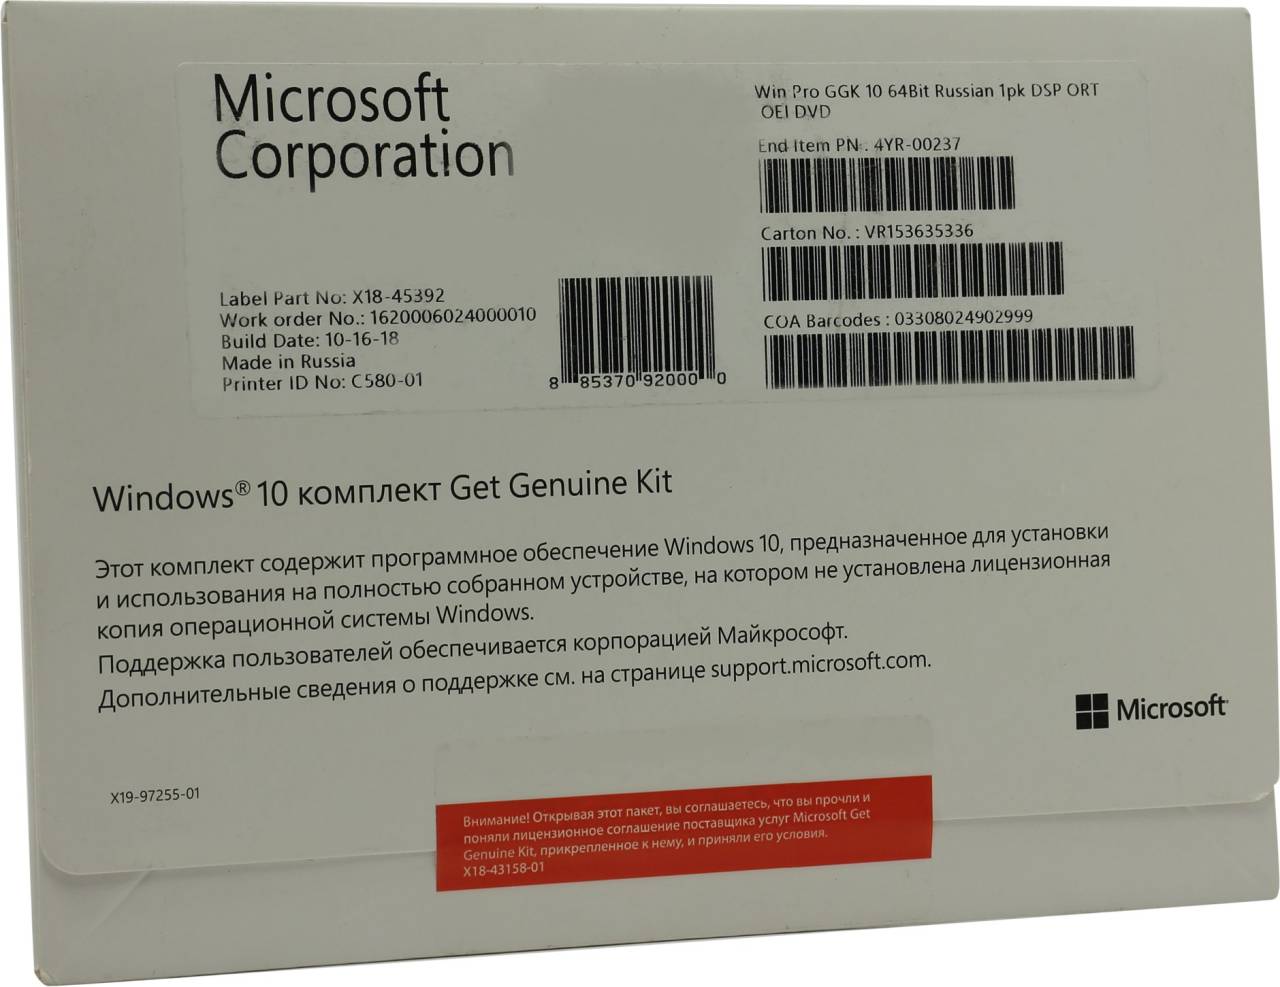     MS Windows 10 Pro  (.)  1  Get Genuine Kit